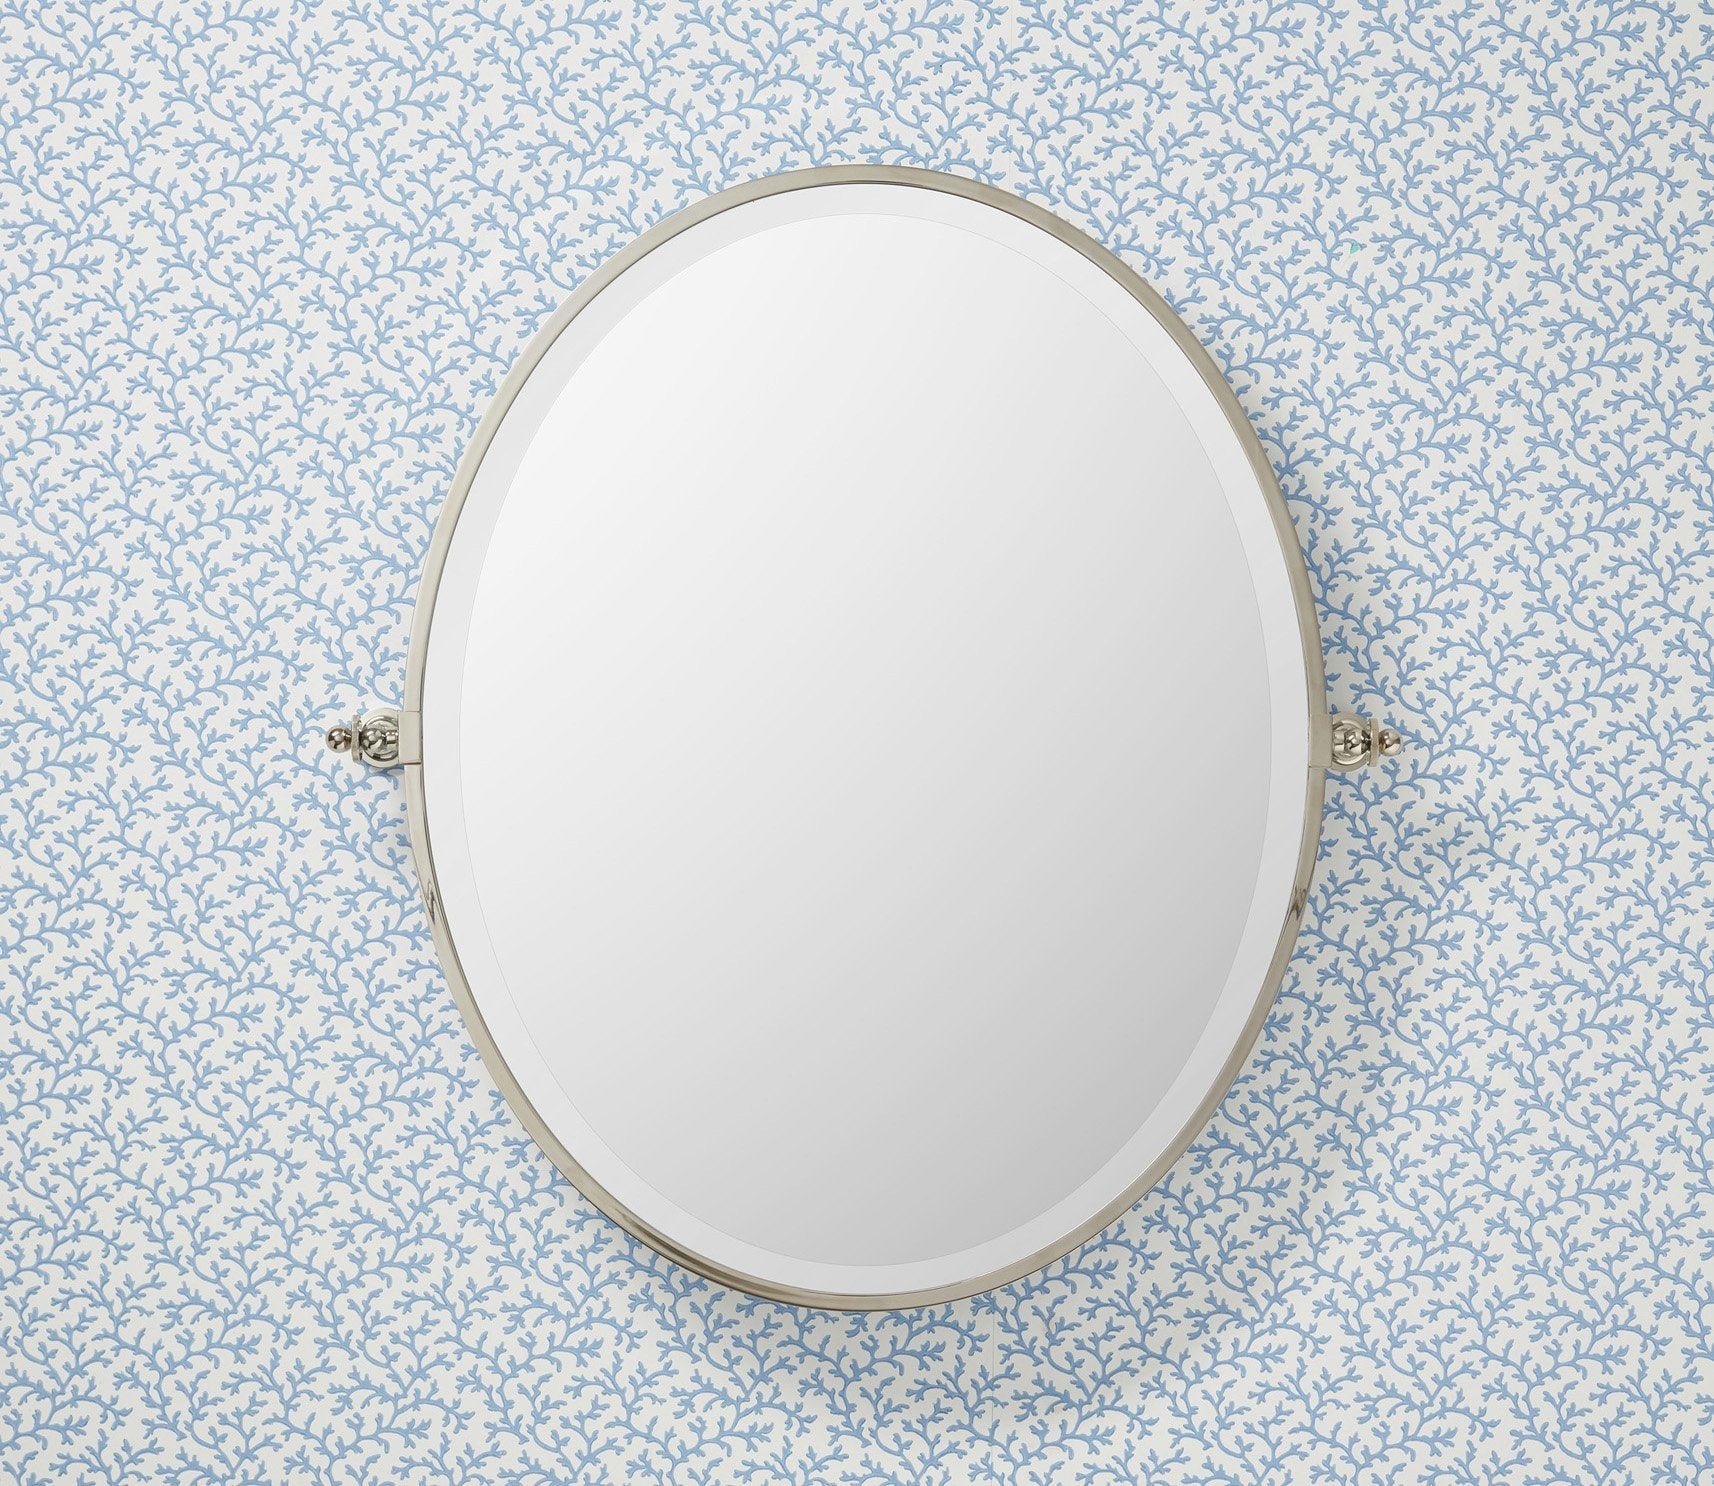 Hanbury Oval Tilting Mirror Product Image 1